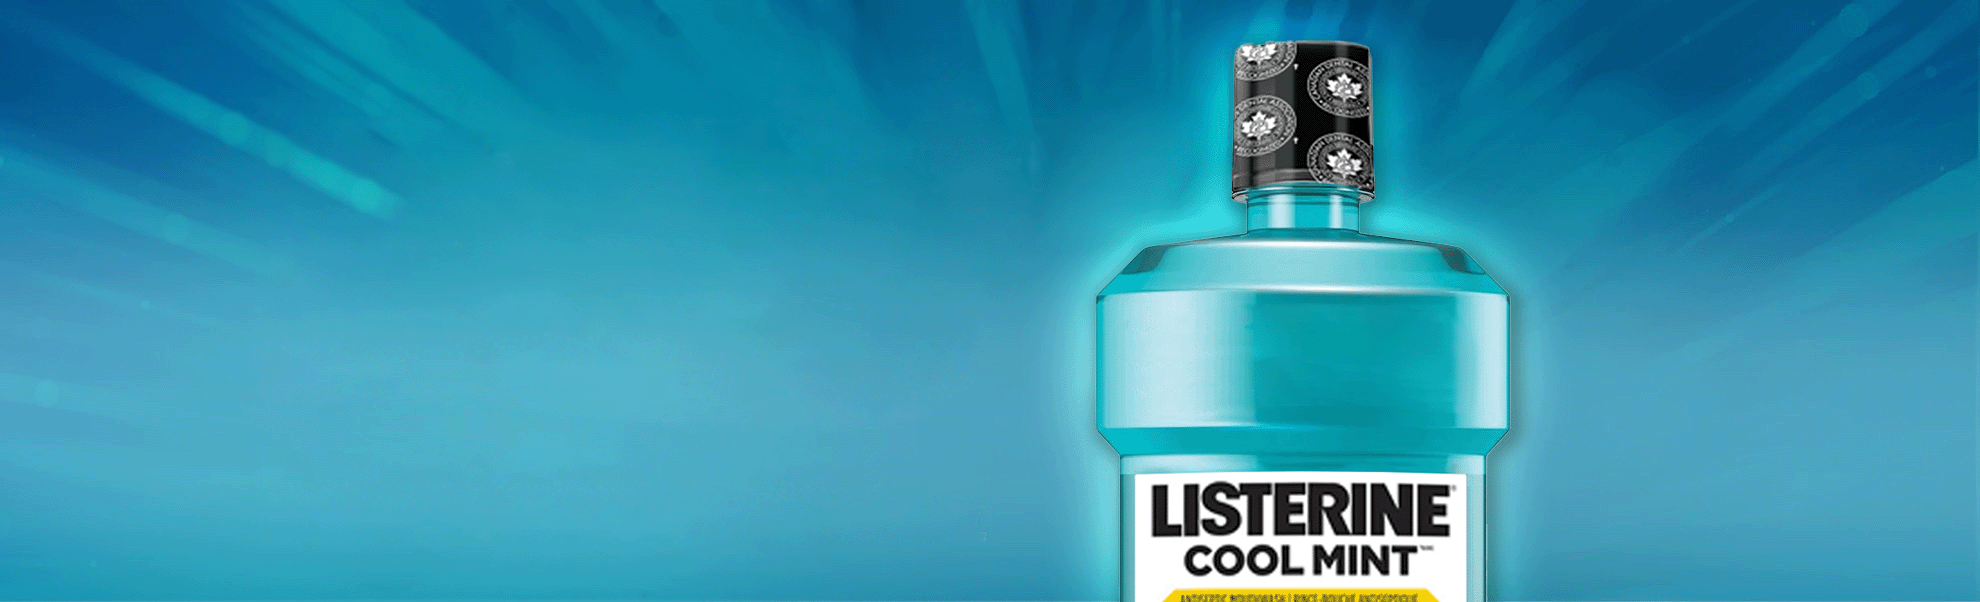 Listerine Cool Mint Antiseptic Mouthwash bottle